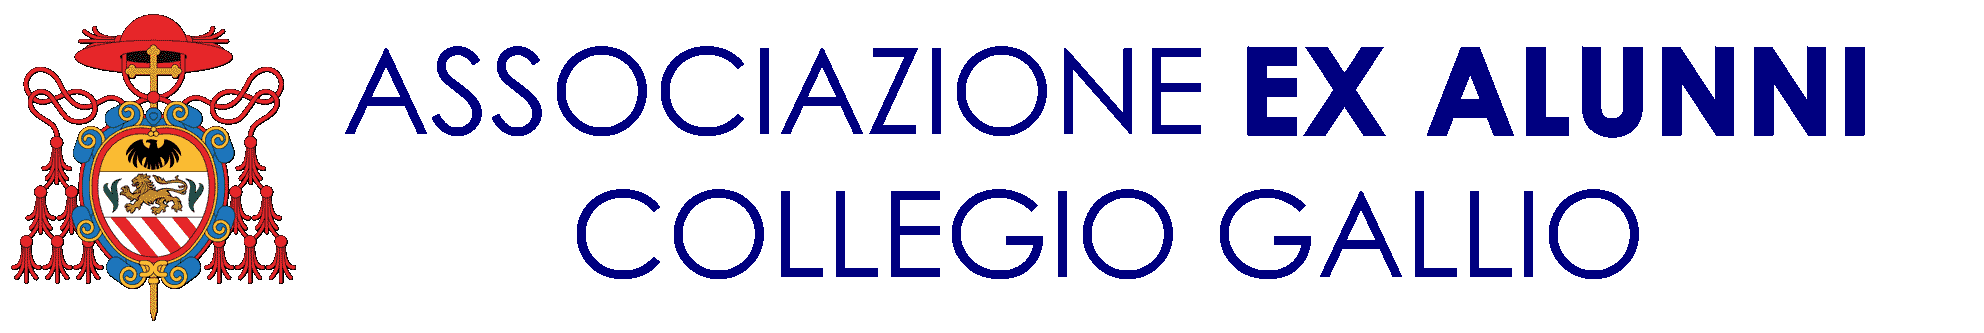 Associazione Ex Alunni Collegio Gallio